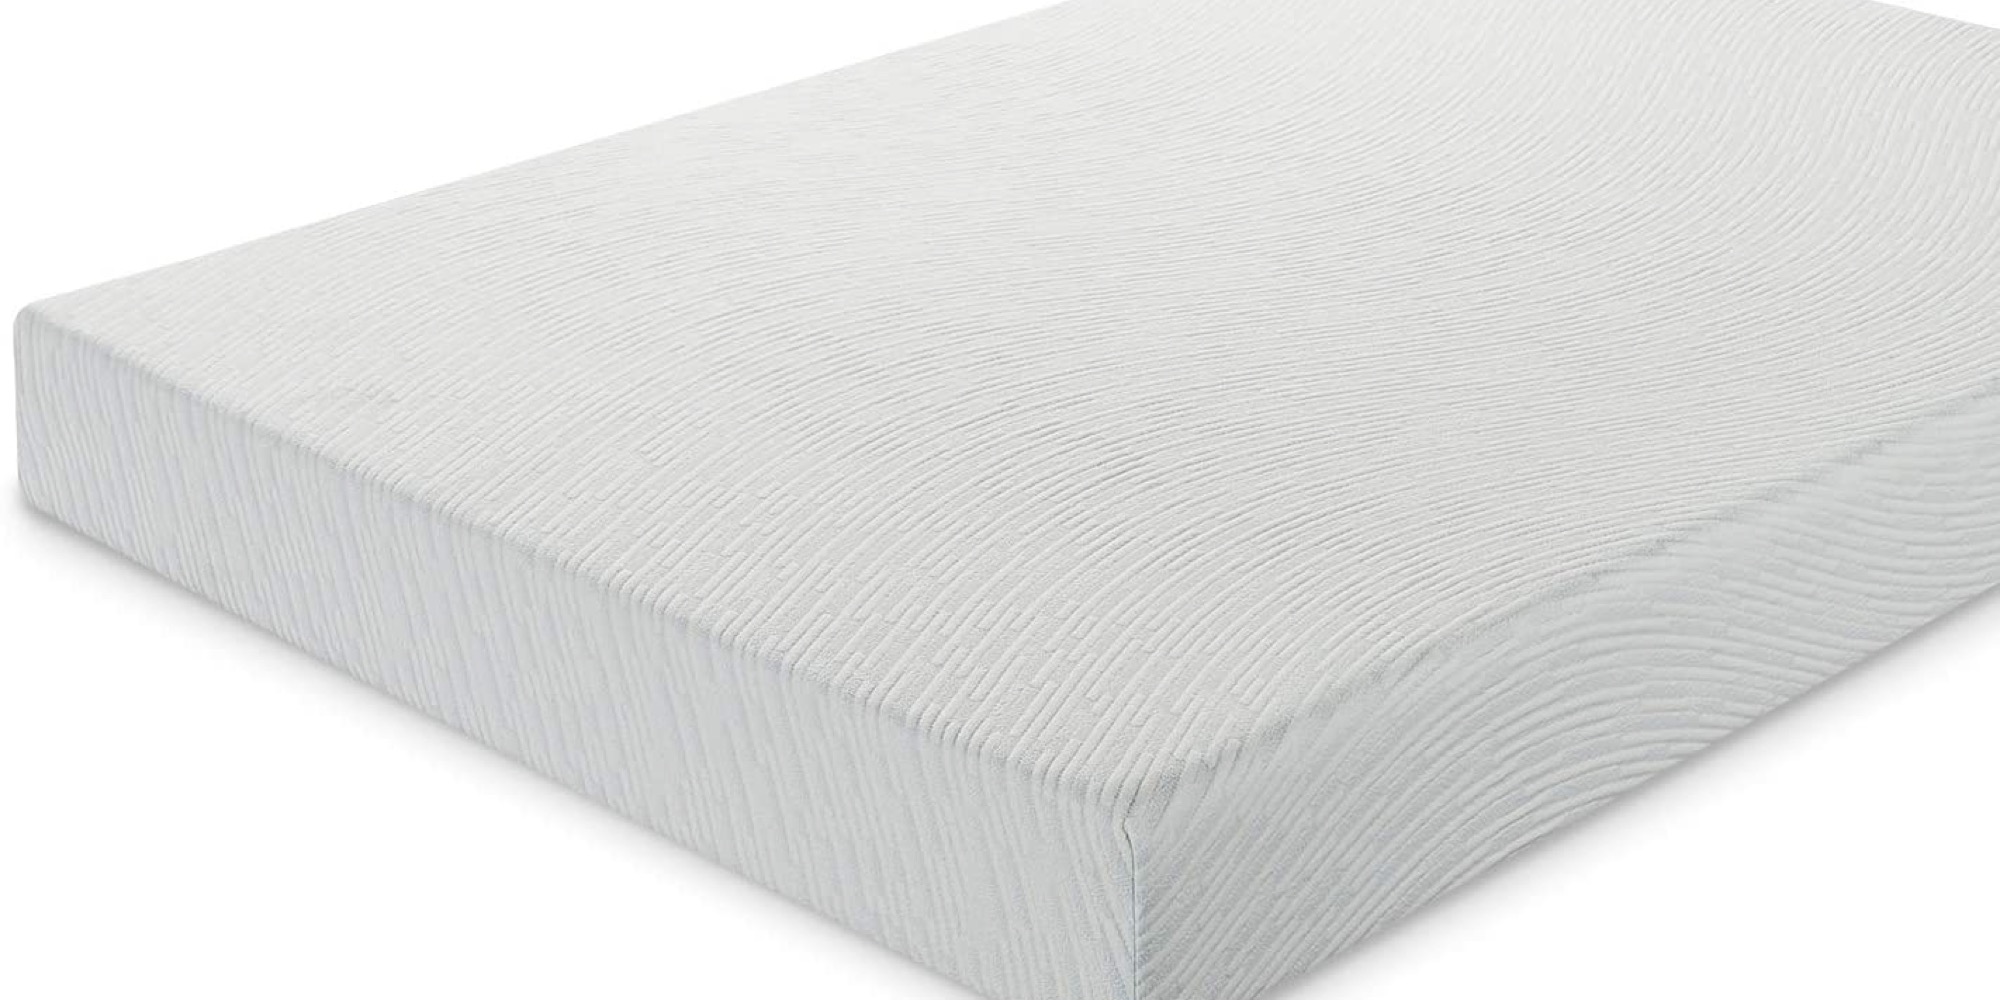 zinus 8 inch memory foam mattress review